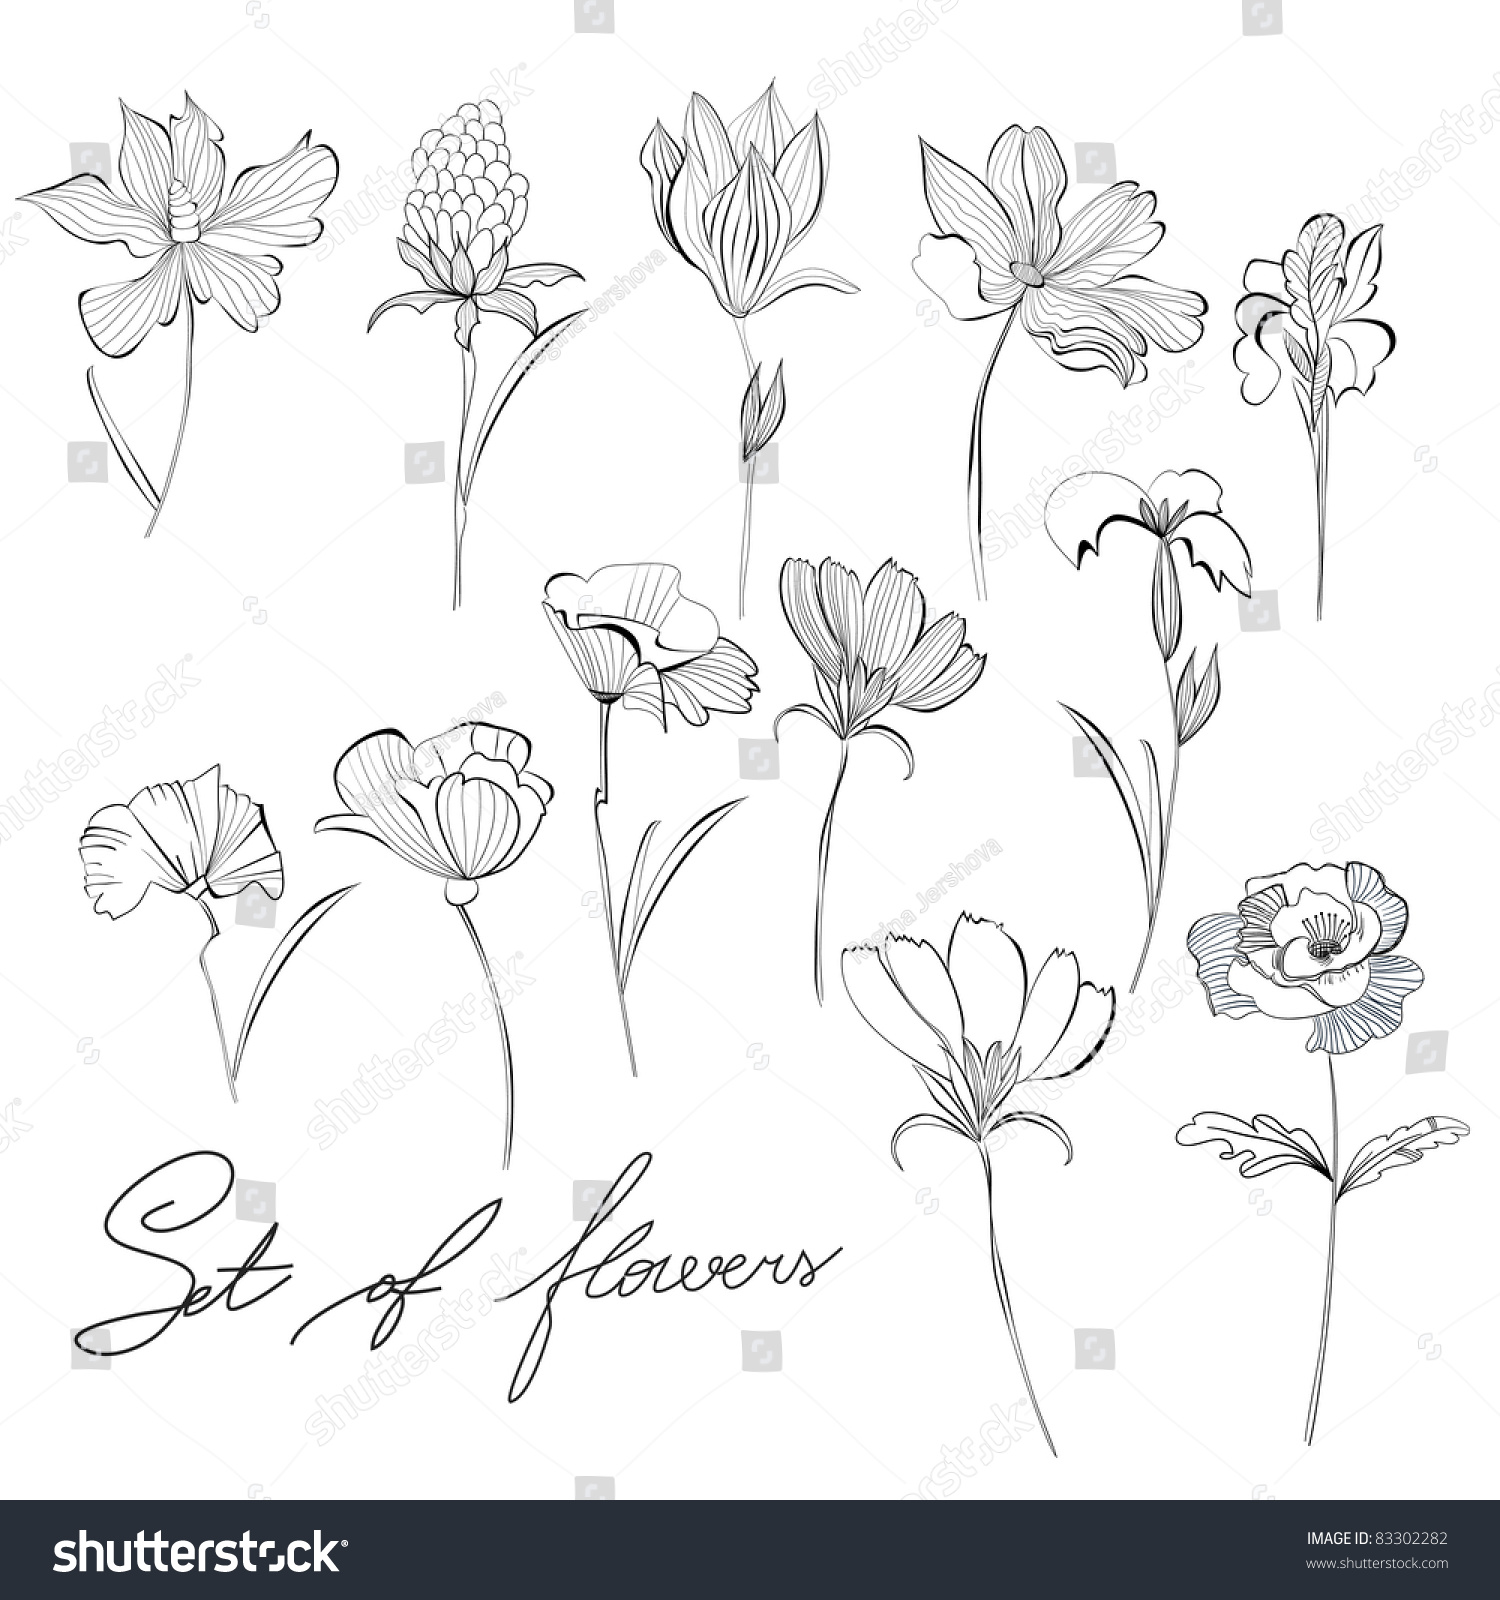 Sketch Of Flowers Stock Vector Illustration 83302282 : Shutterstock